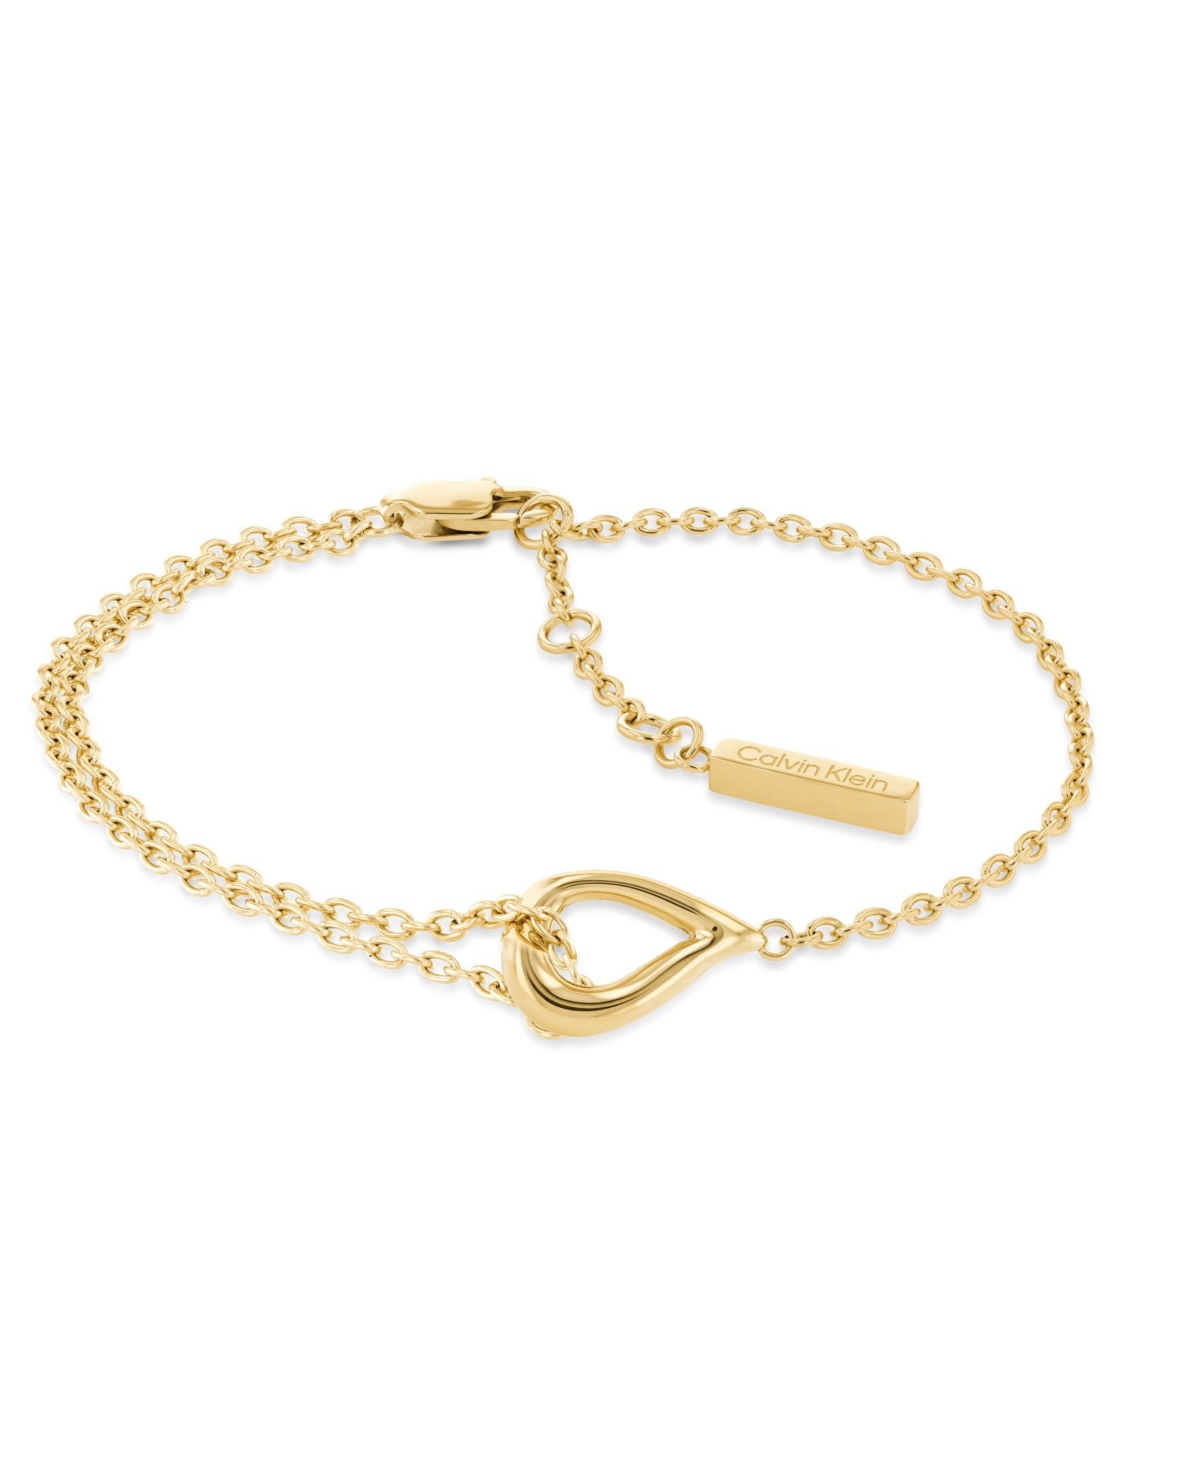 Women's Stainless Steel Bracelet - Gold-tone